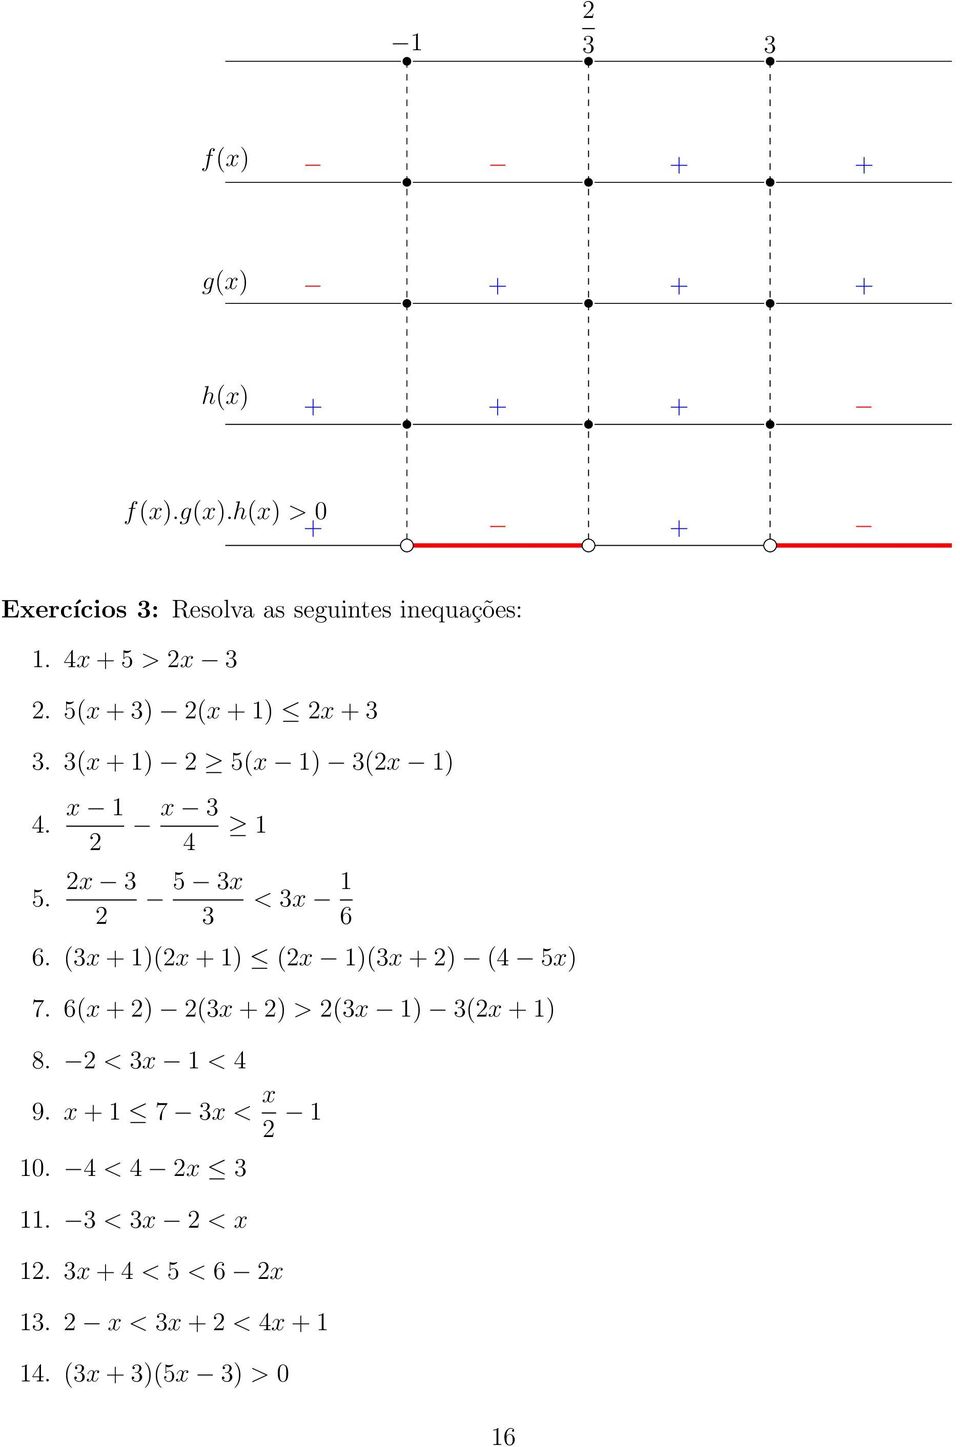 (3x + )(x + ) (x )(3x + ) (4 5x) 7. 6(x + ) (3x + ) > (3x ) 3(x + ) 8. < 3x < 4 9.